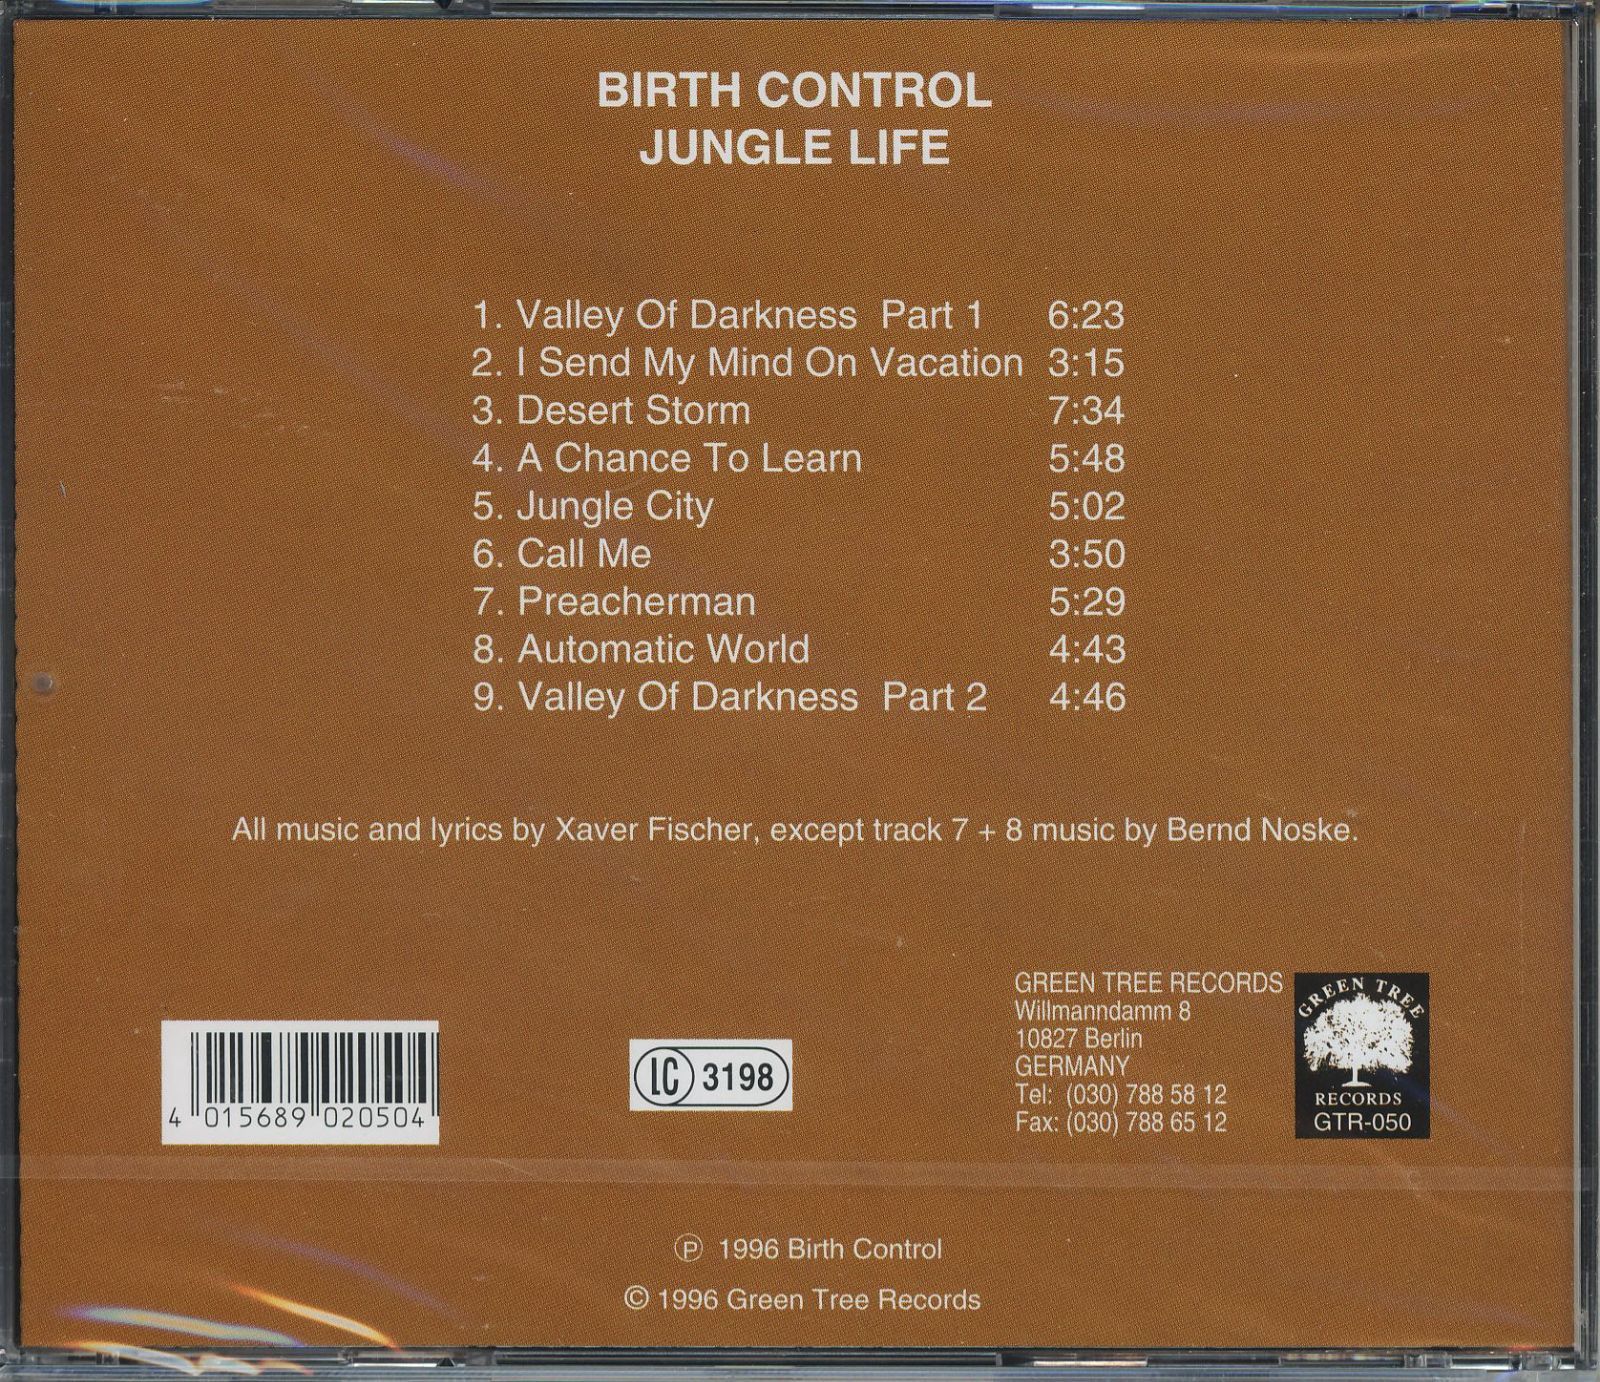 BIRTH CONTROL JUNGLE LIFE ドイツ盤 - www.jcbonds.com